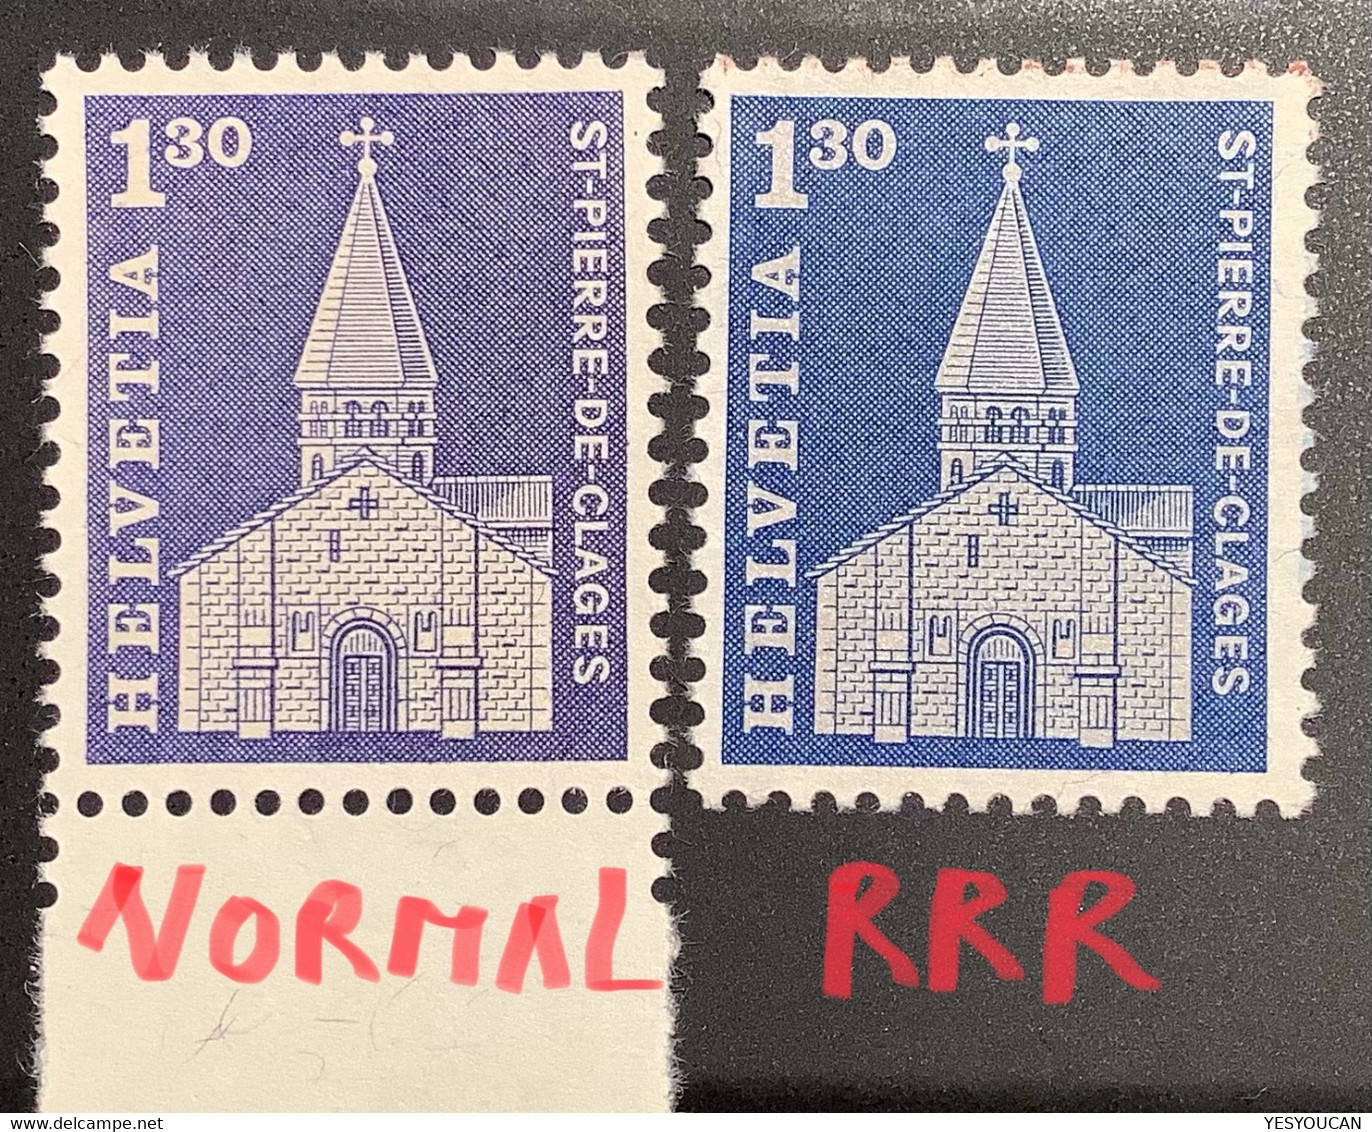 Schweiz RRR ! 1966 #421 FARBPROBE 1.30Fr BLAU Statt Ultramarin Attest(Kirche St Pierre De Clages Eglise Suisse VS Proof - Neufs